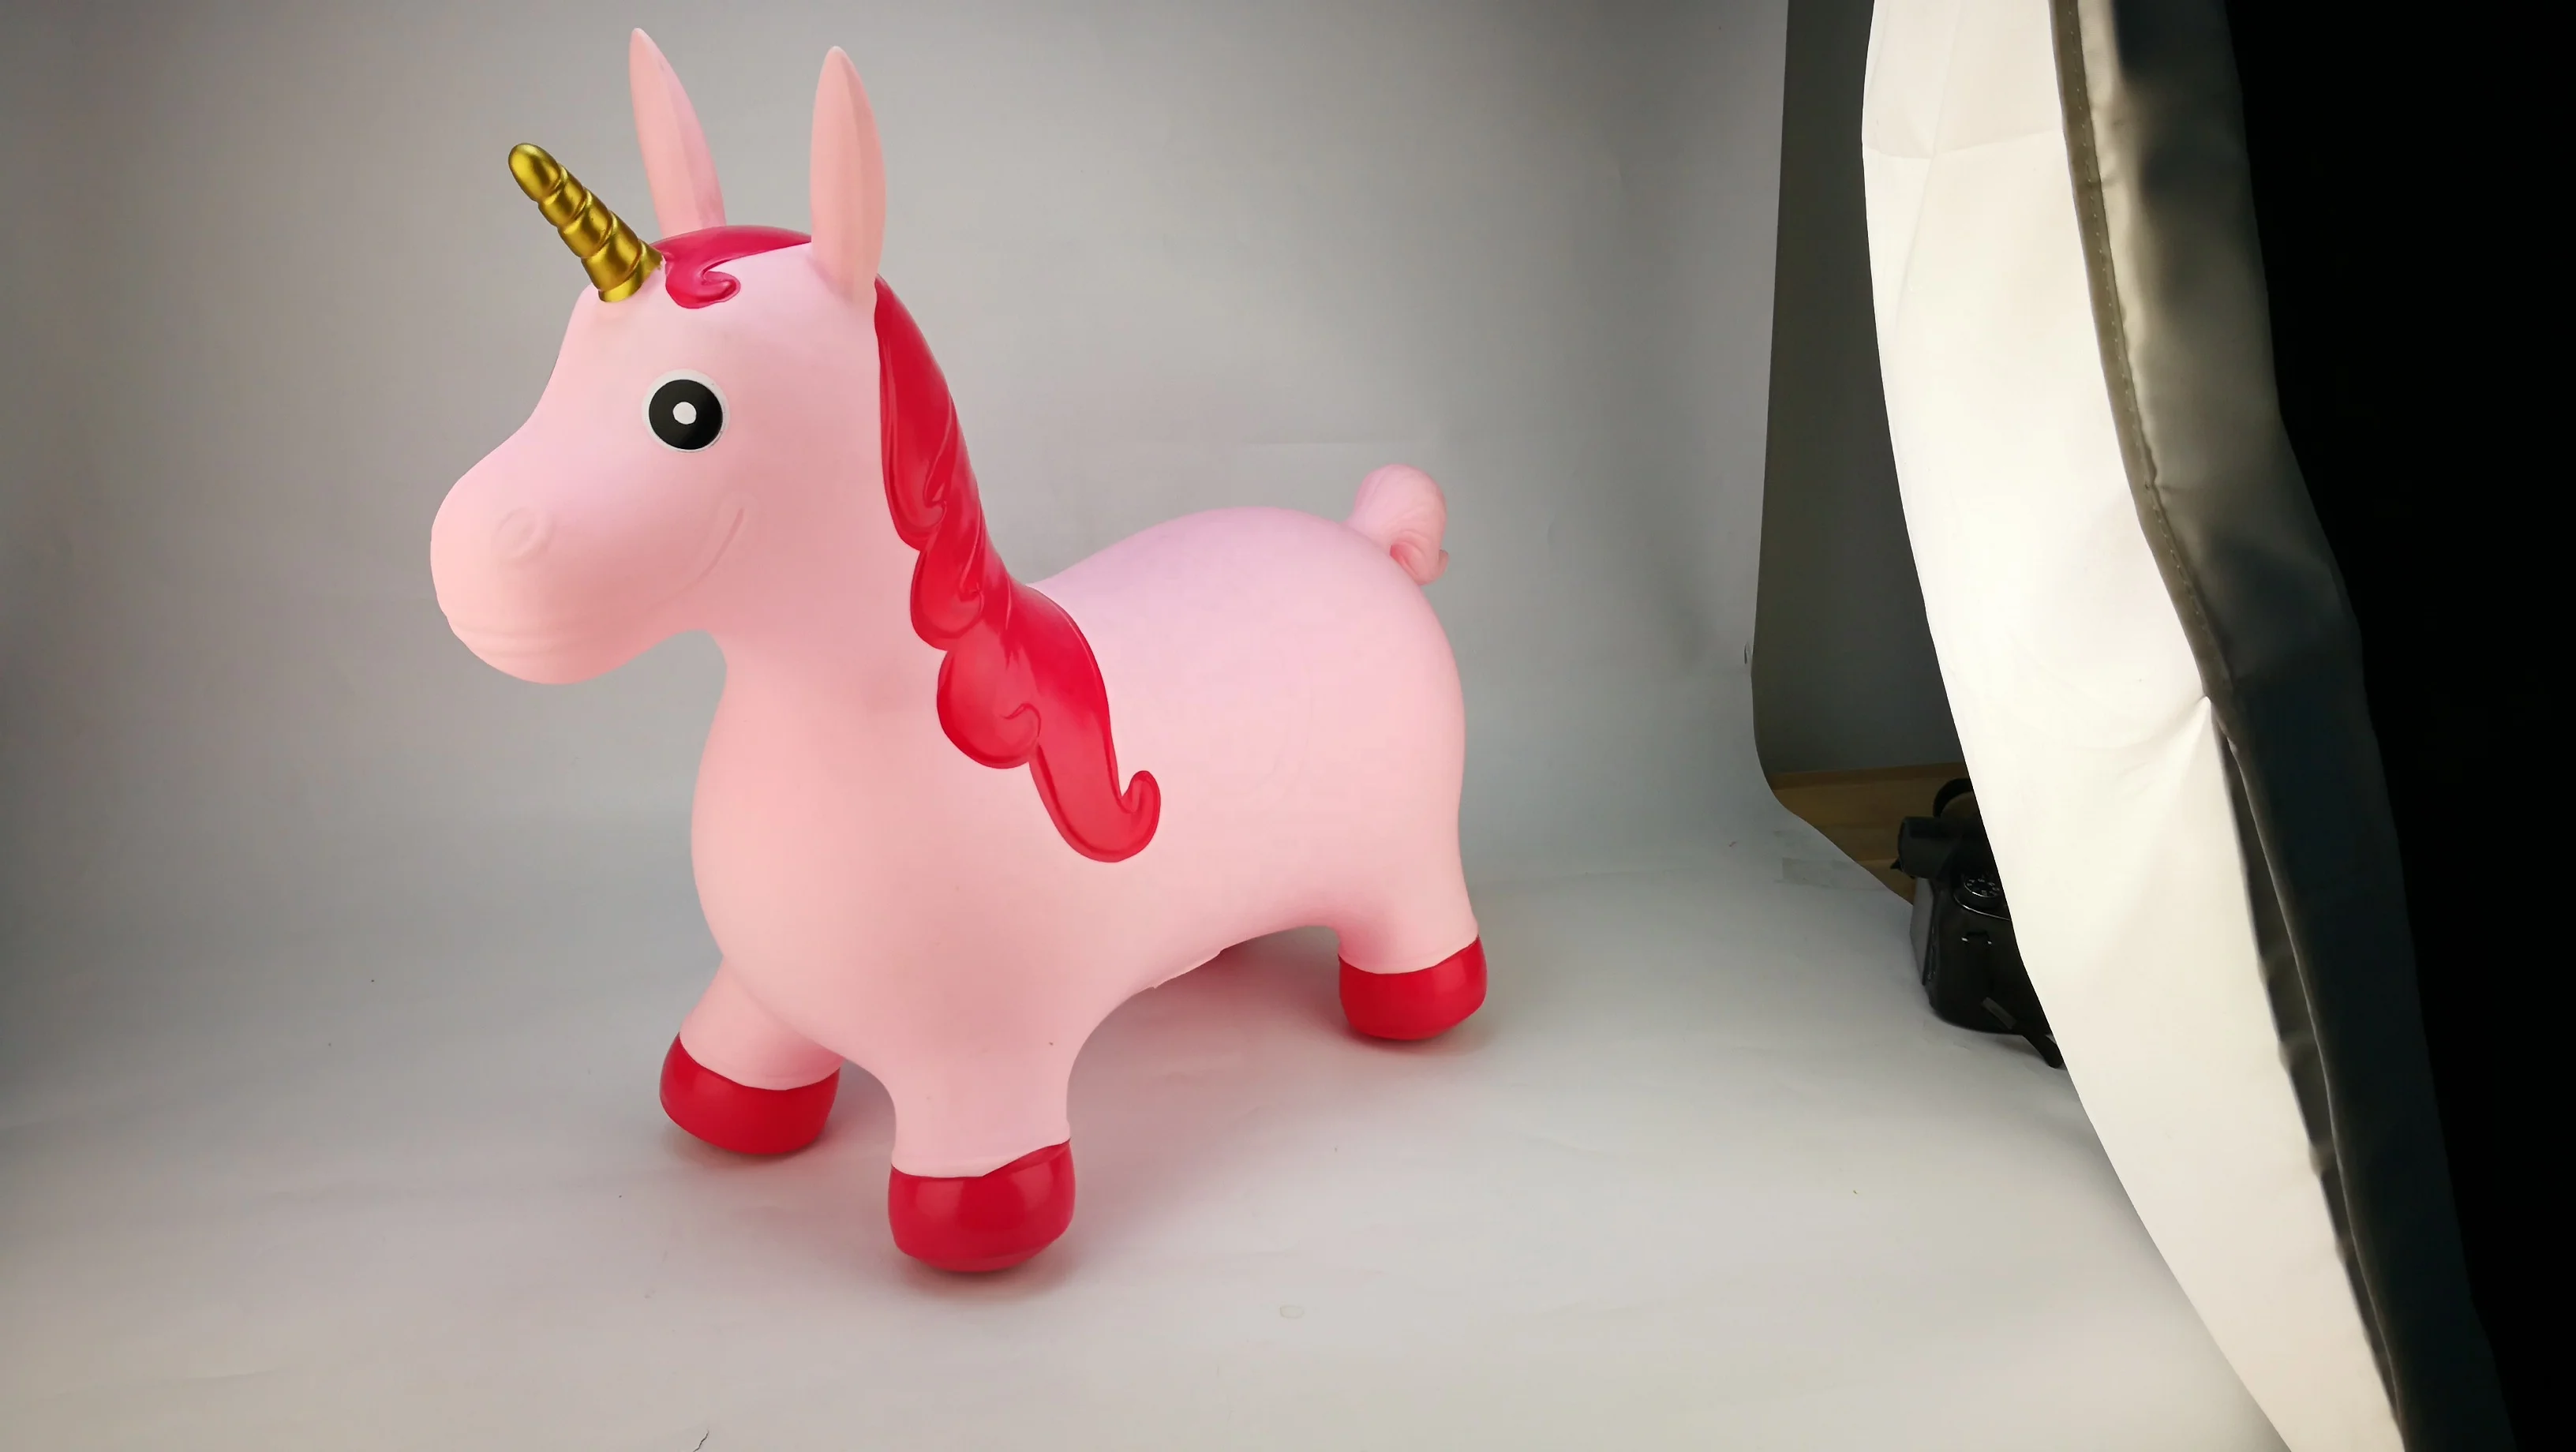 
Inflatable unicorn toy for kids ride on unicor animal hopper 